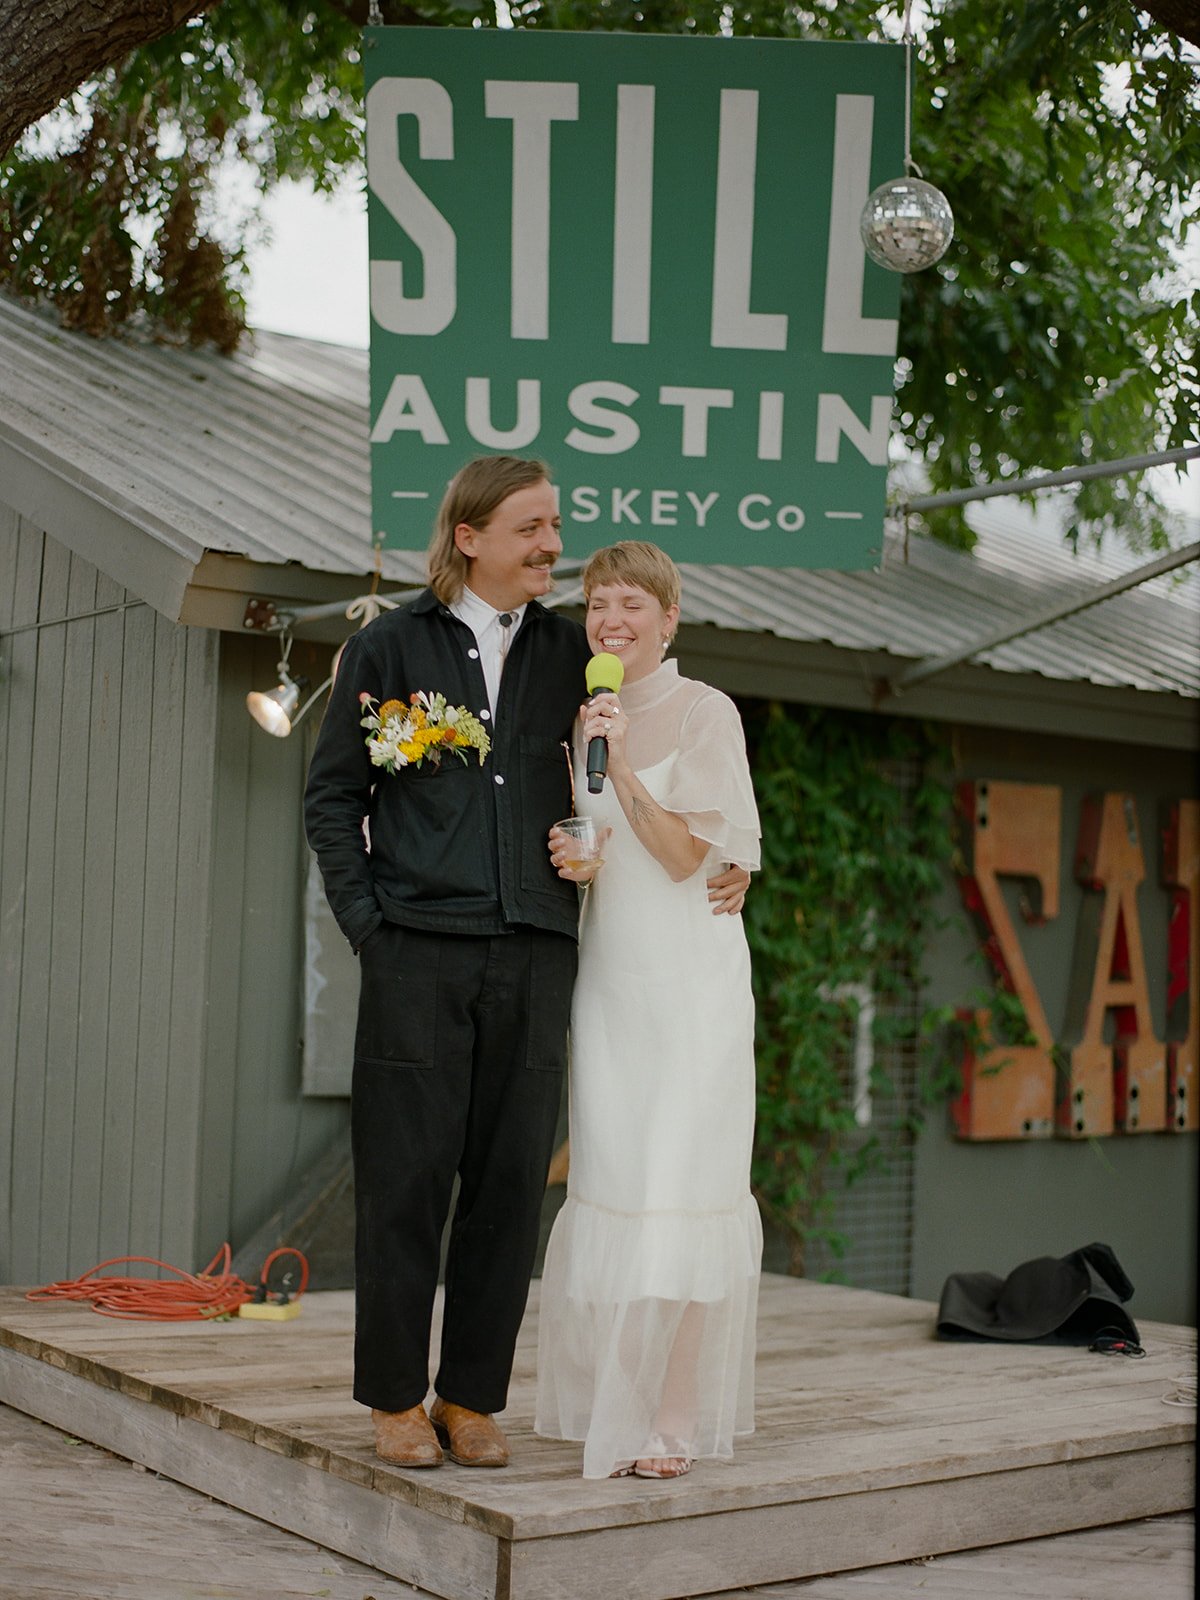 Best-Film-35mm-Austin-Wedding-Photographer-the-Long-time-Super8-119.jpg